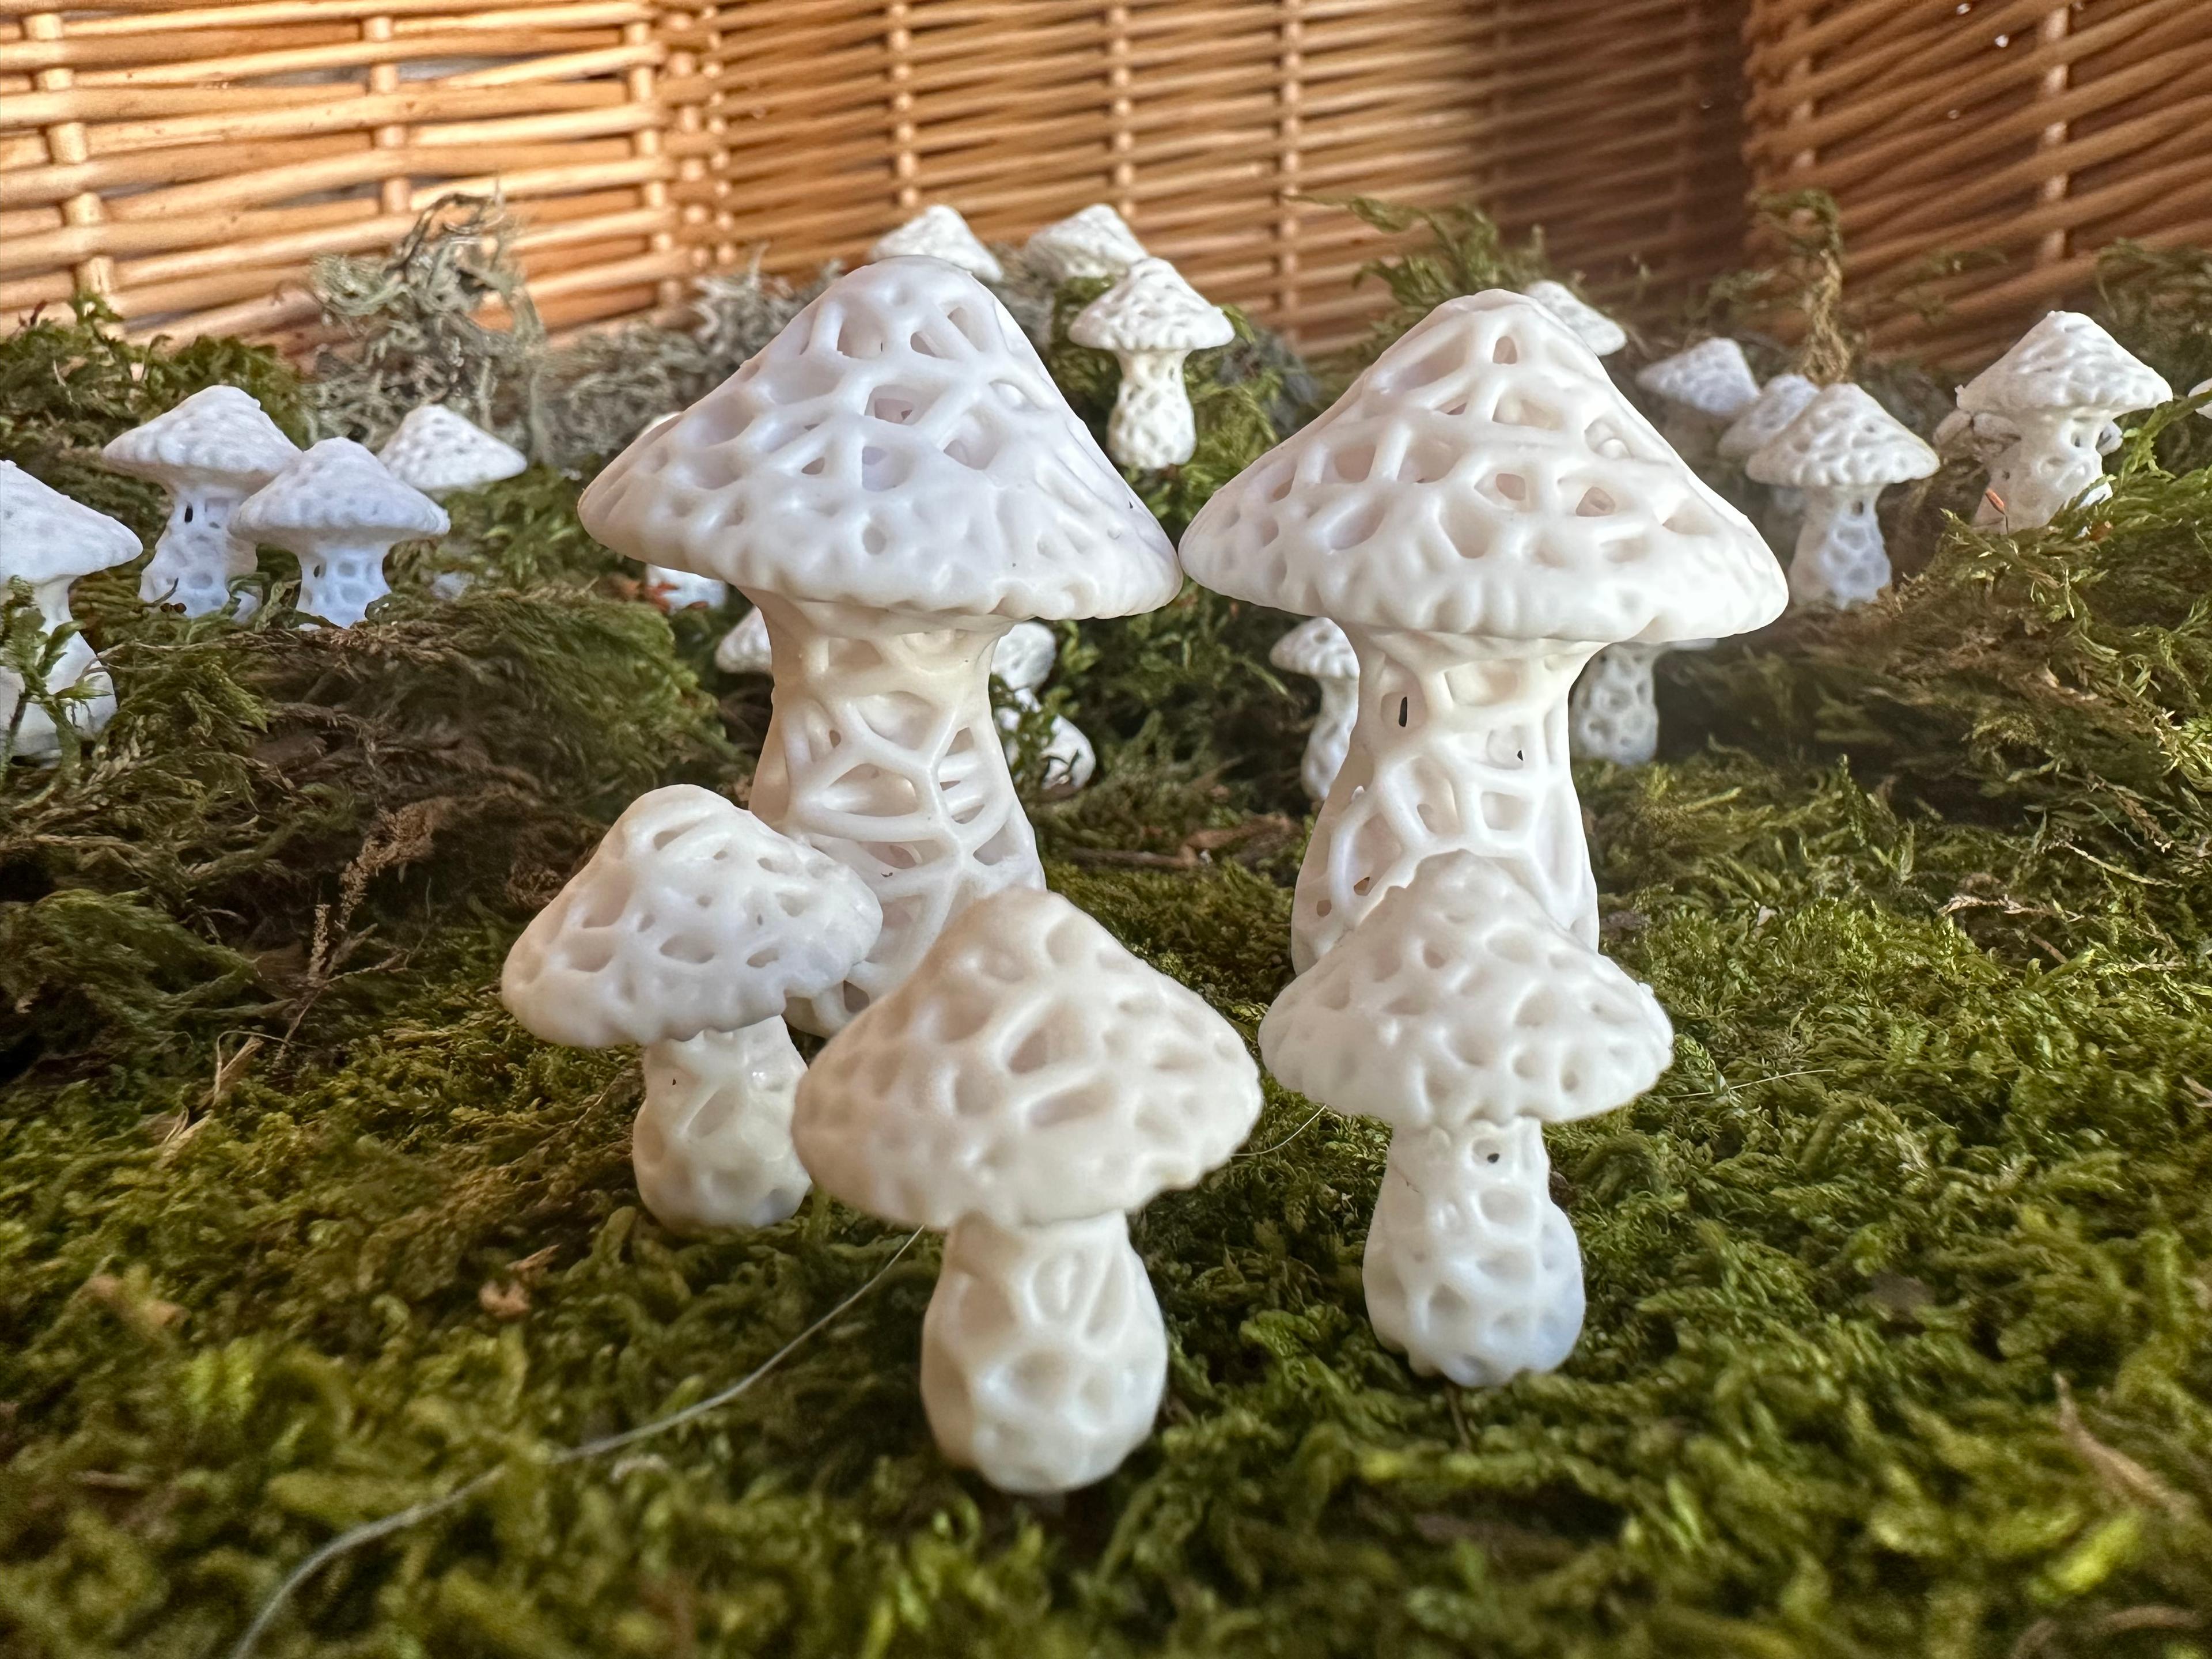 Stochastic Mushroom Magnets (Large) 3d model